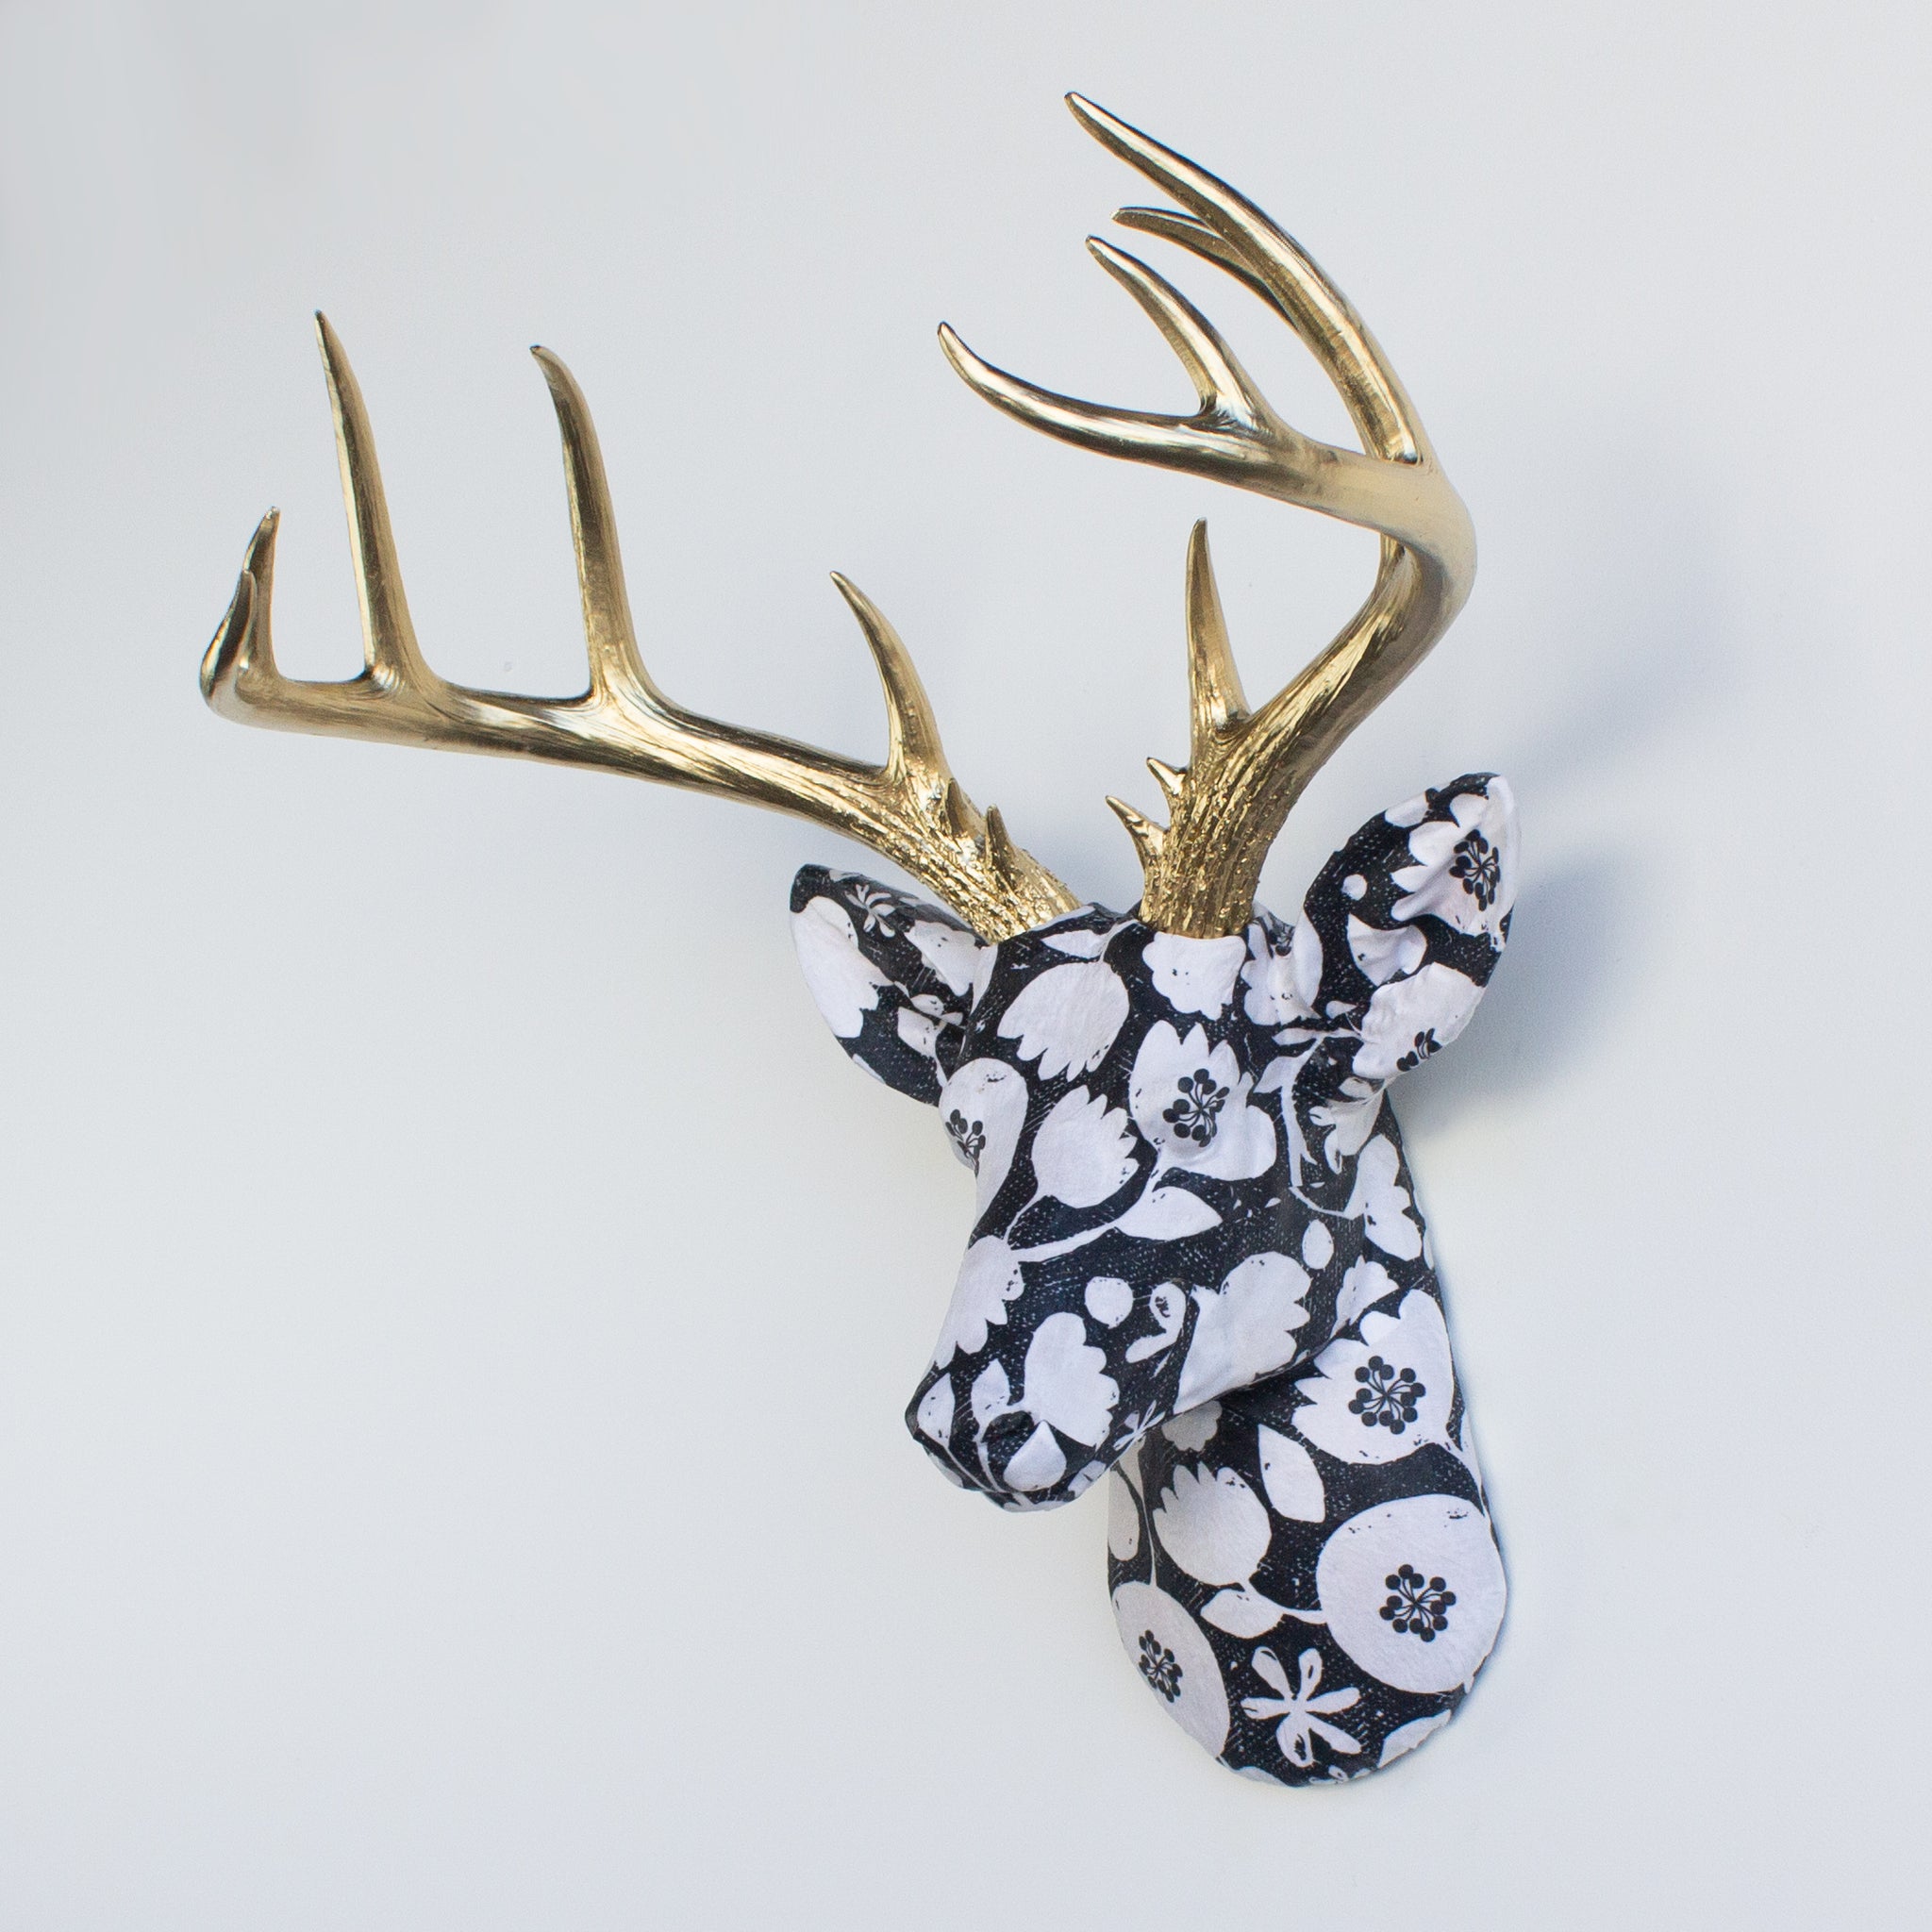 Fabric Deer Head - Black and White Flower Pattern Fabric Deer Head - Gold Antlers- Faux Taxidermy Deer Head Wall Mount